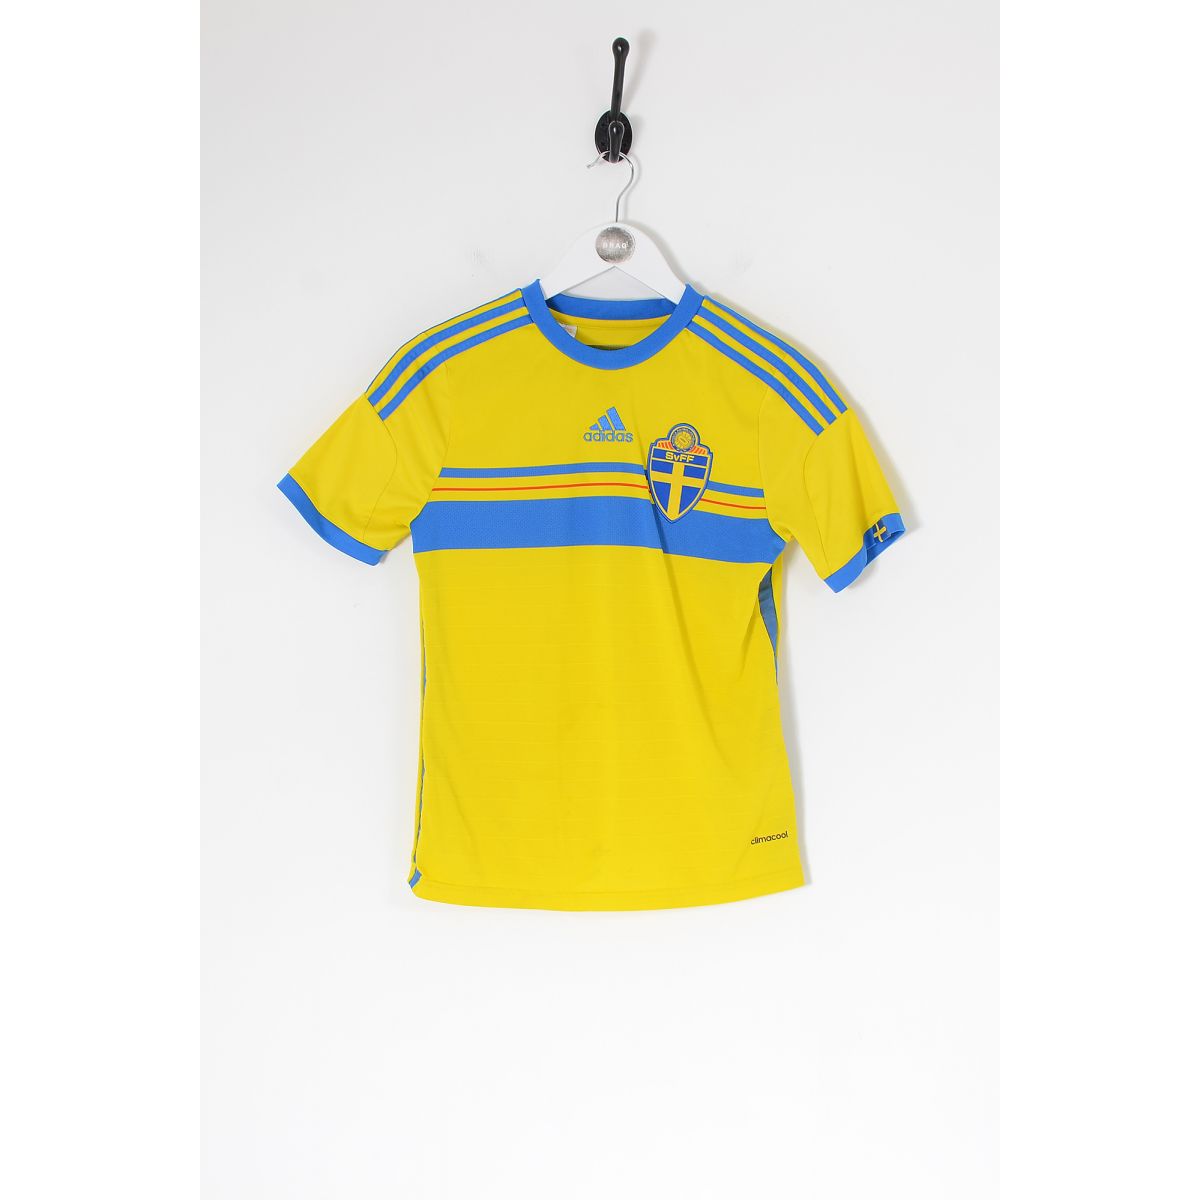 Vintage ADIDAS Sweden World Cup Kit Football Shirt Yellow XS